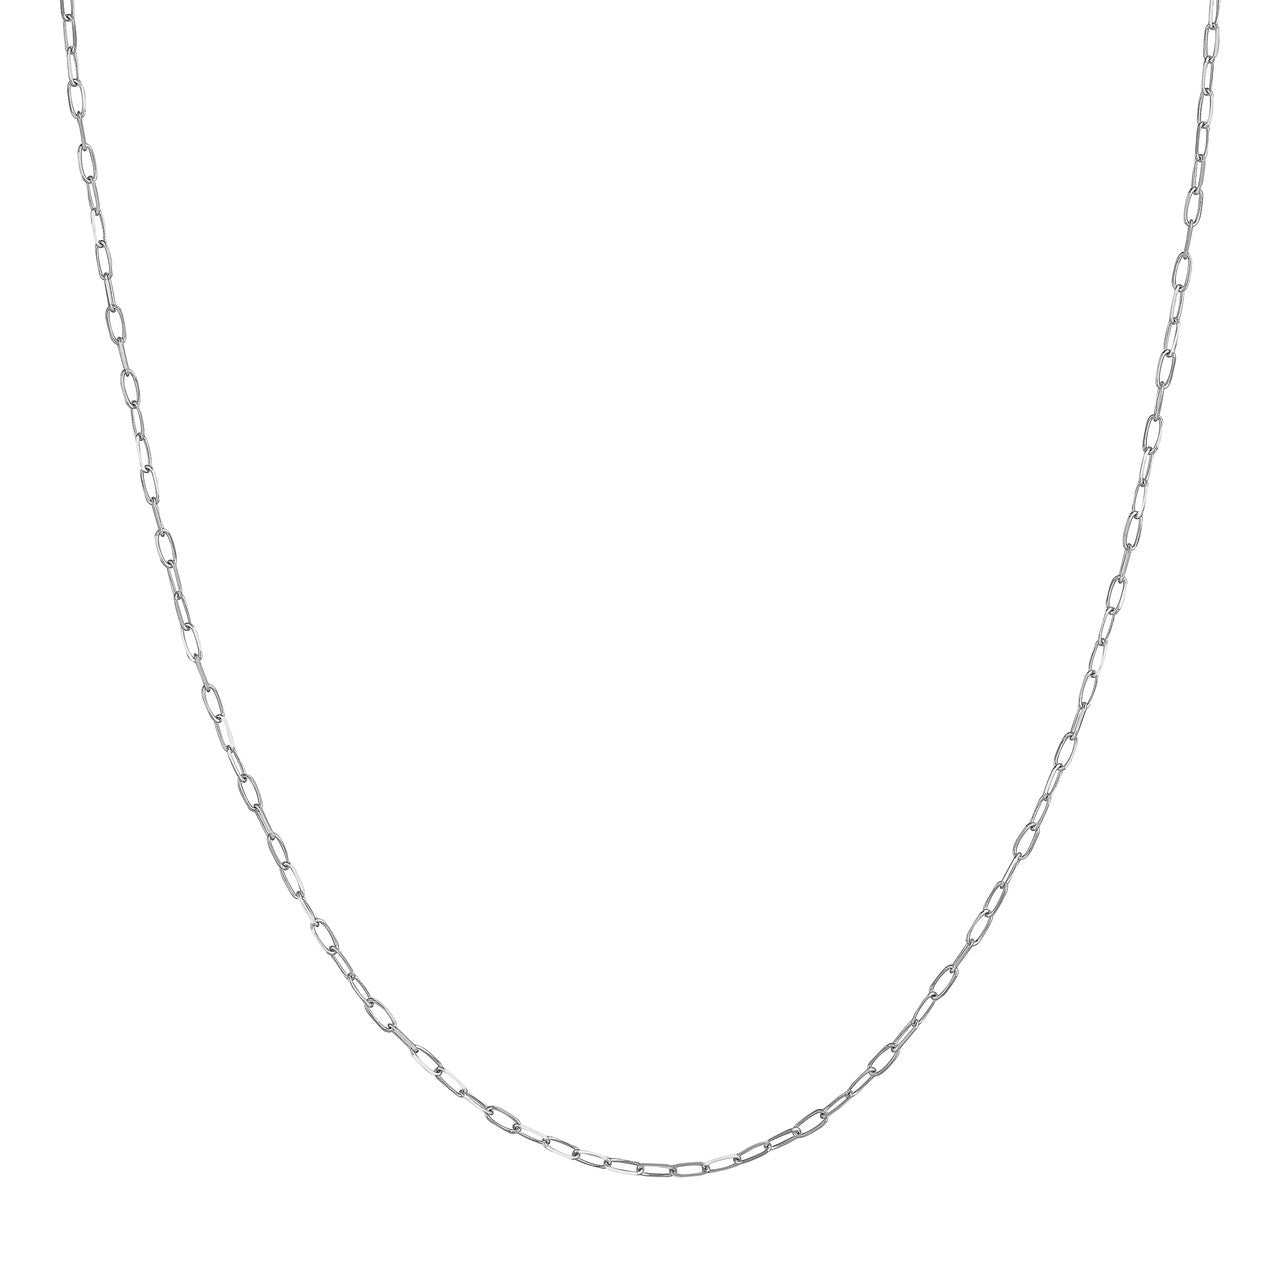 Heart Shape Padlock Charm Holder Paper Clip Chain Necklace, Padlock Necklace  | eBay